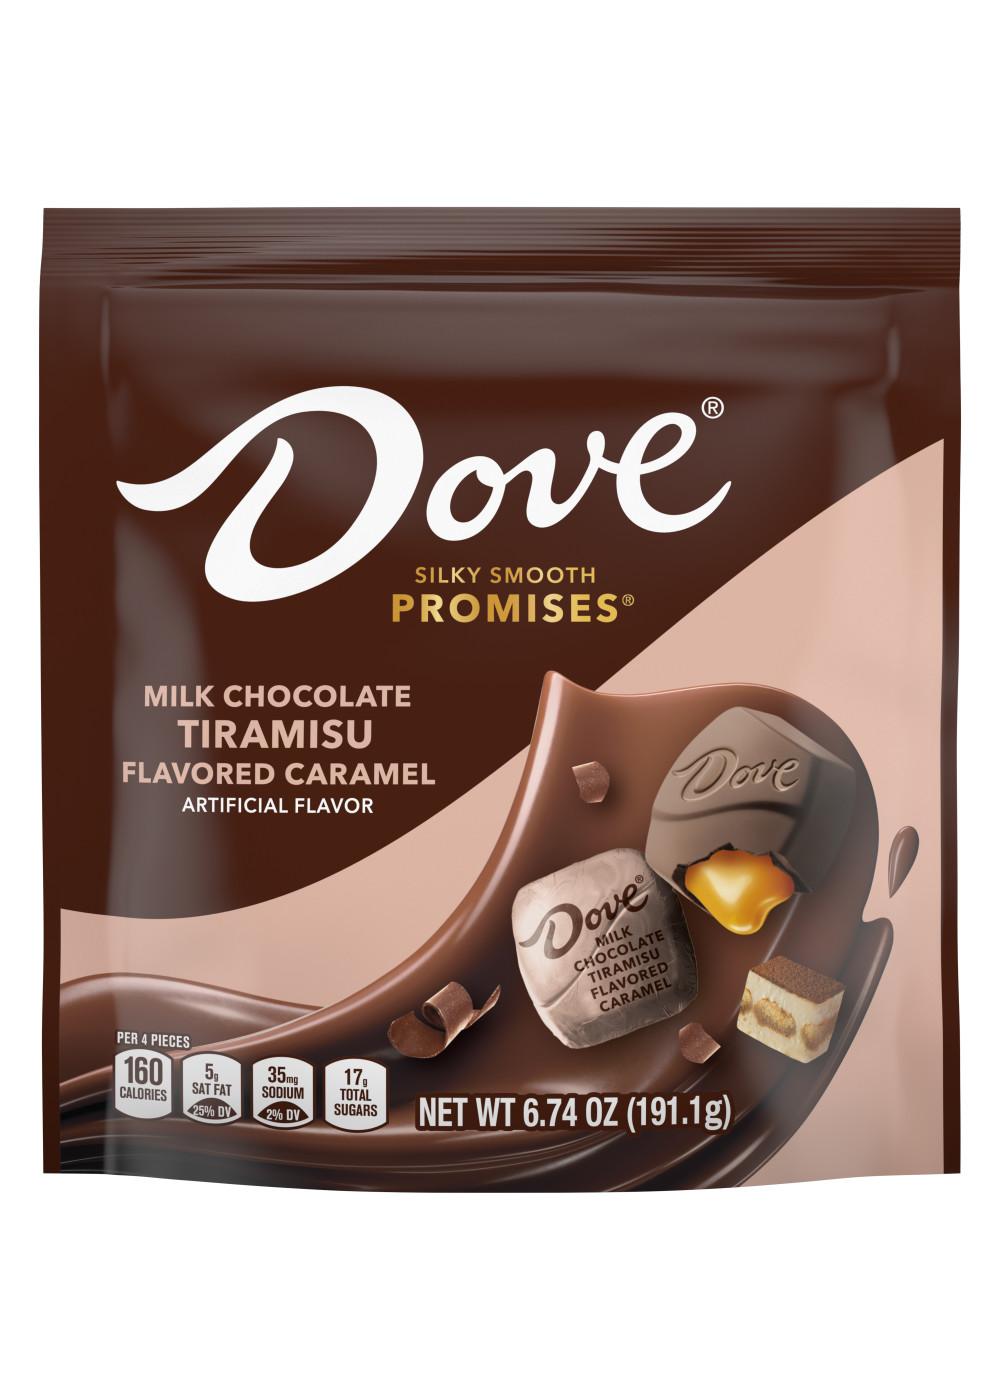 Dove Promises Milk Chocolate Tiramisu Caramel Candy; image 1 of 7